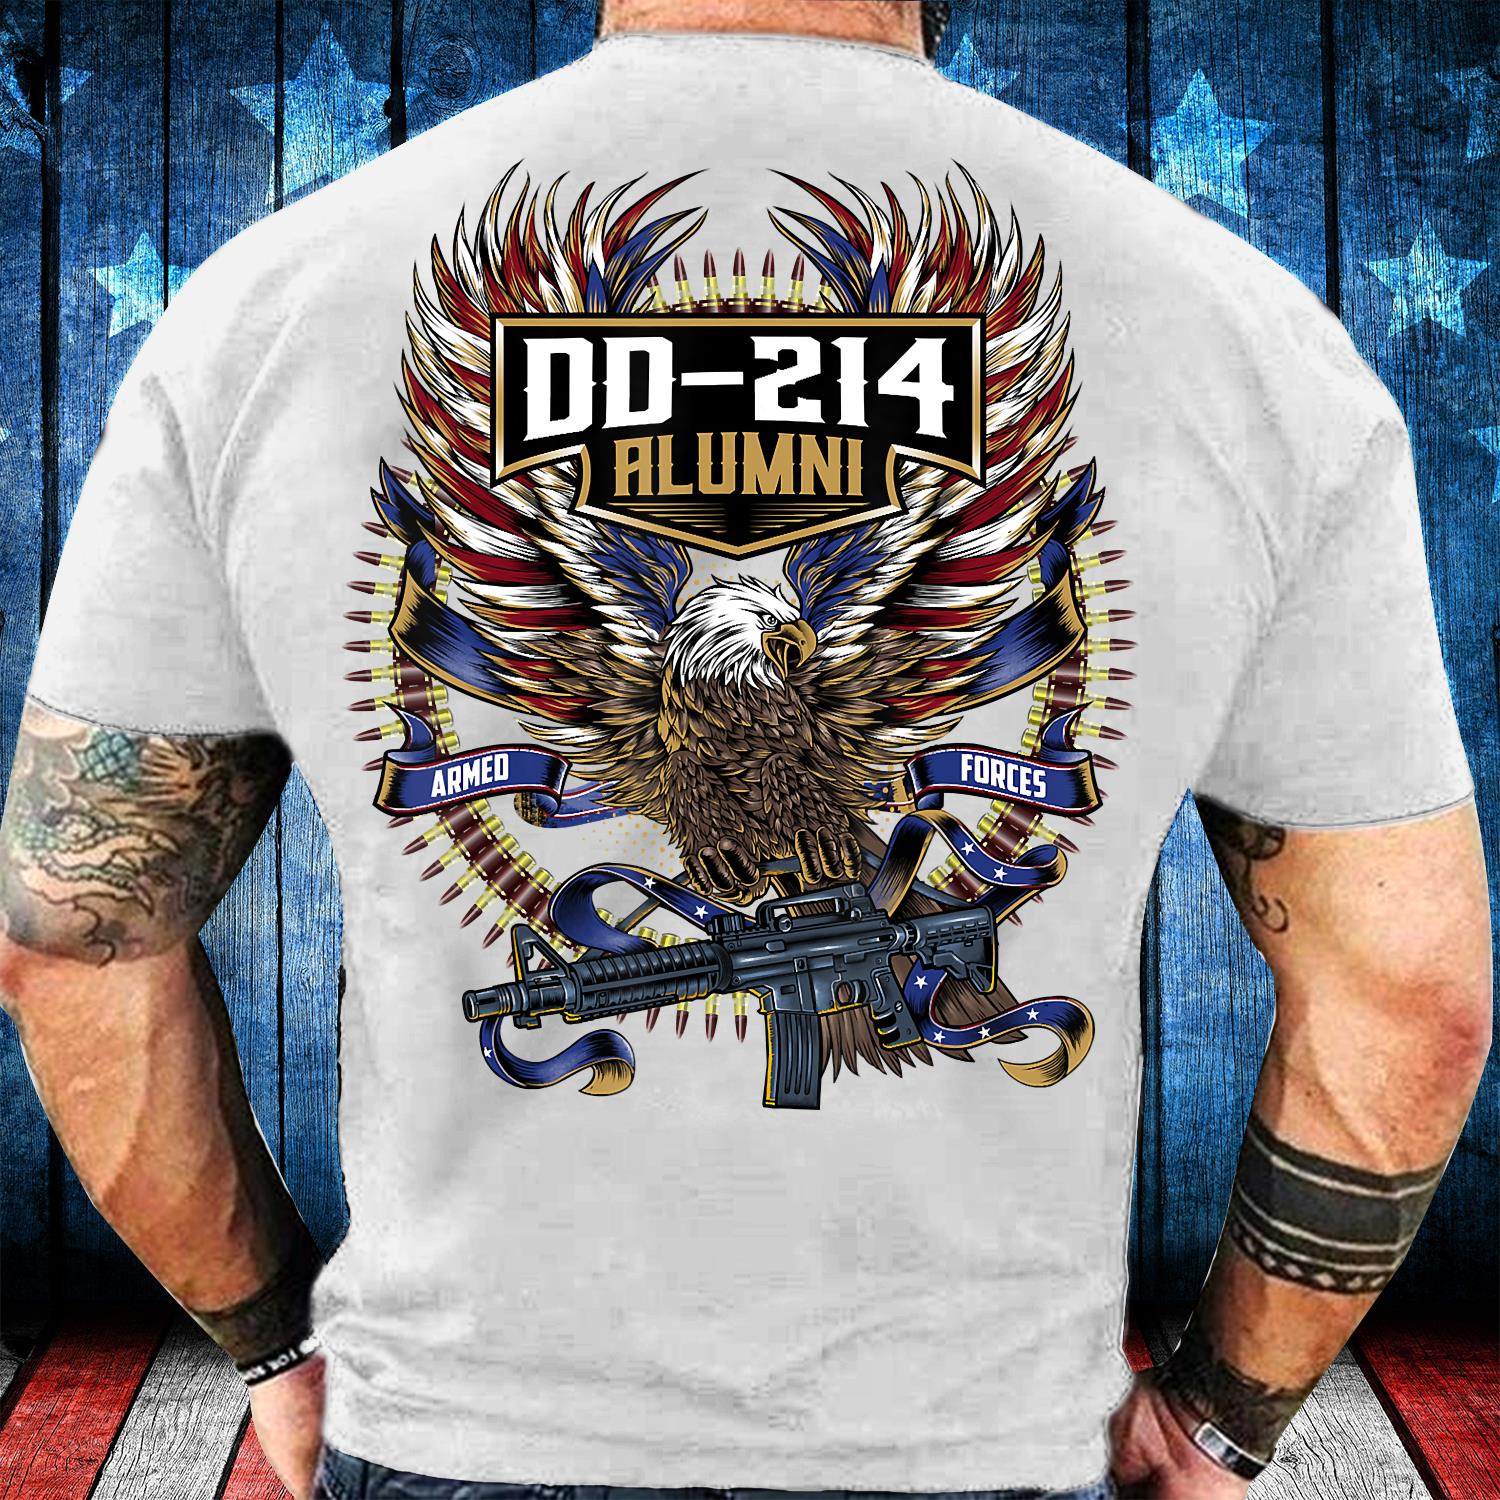 DD-214 Alumni Veteran Military Armed Forces Gift T-Shirt